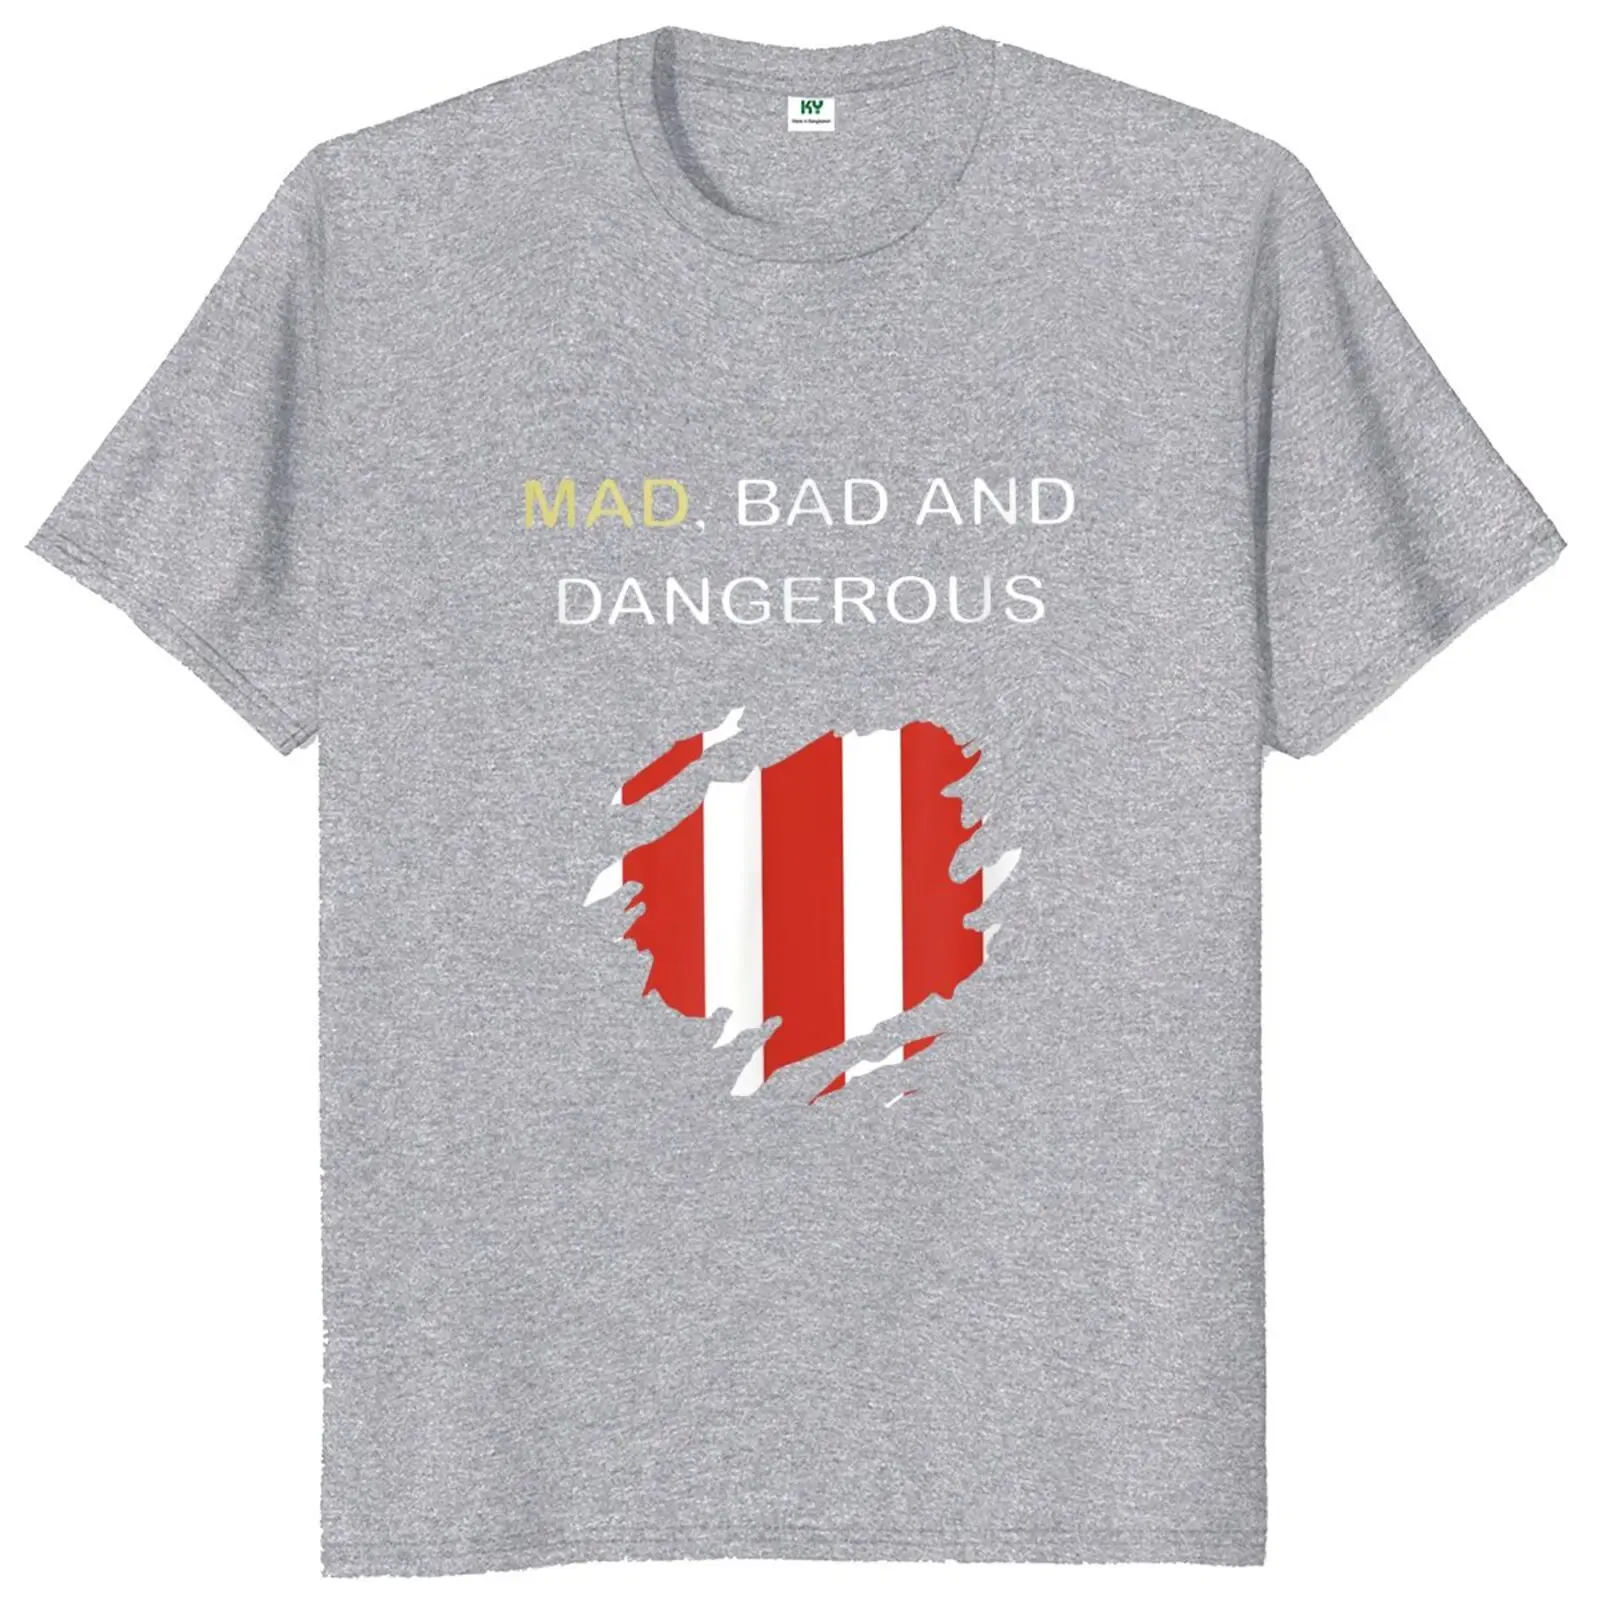 

Mad Bad And Dangerous T Shirt For Football Fans Women's Men's Camiseta 100% Cotton Short Sleeve Oversized Summer Tshirt